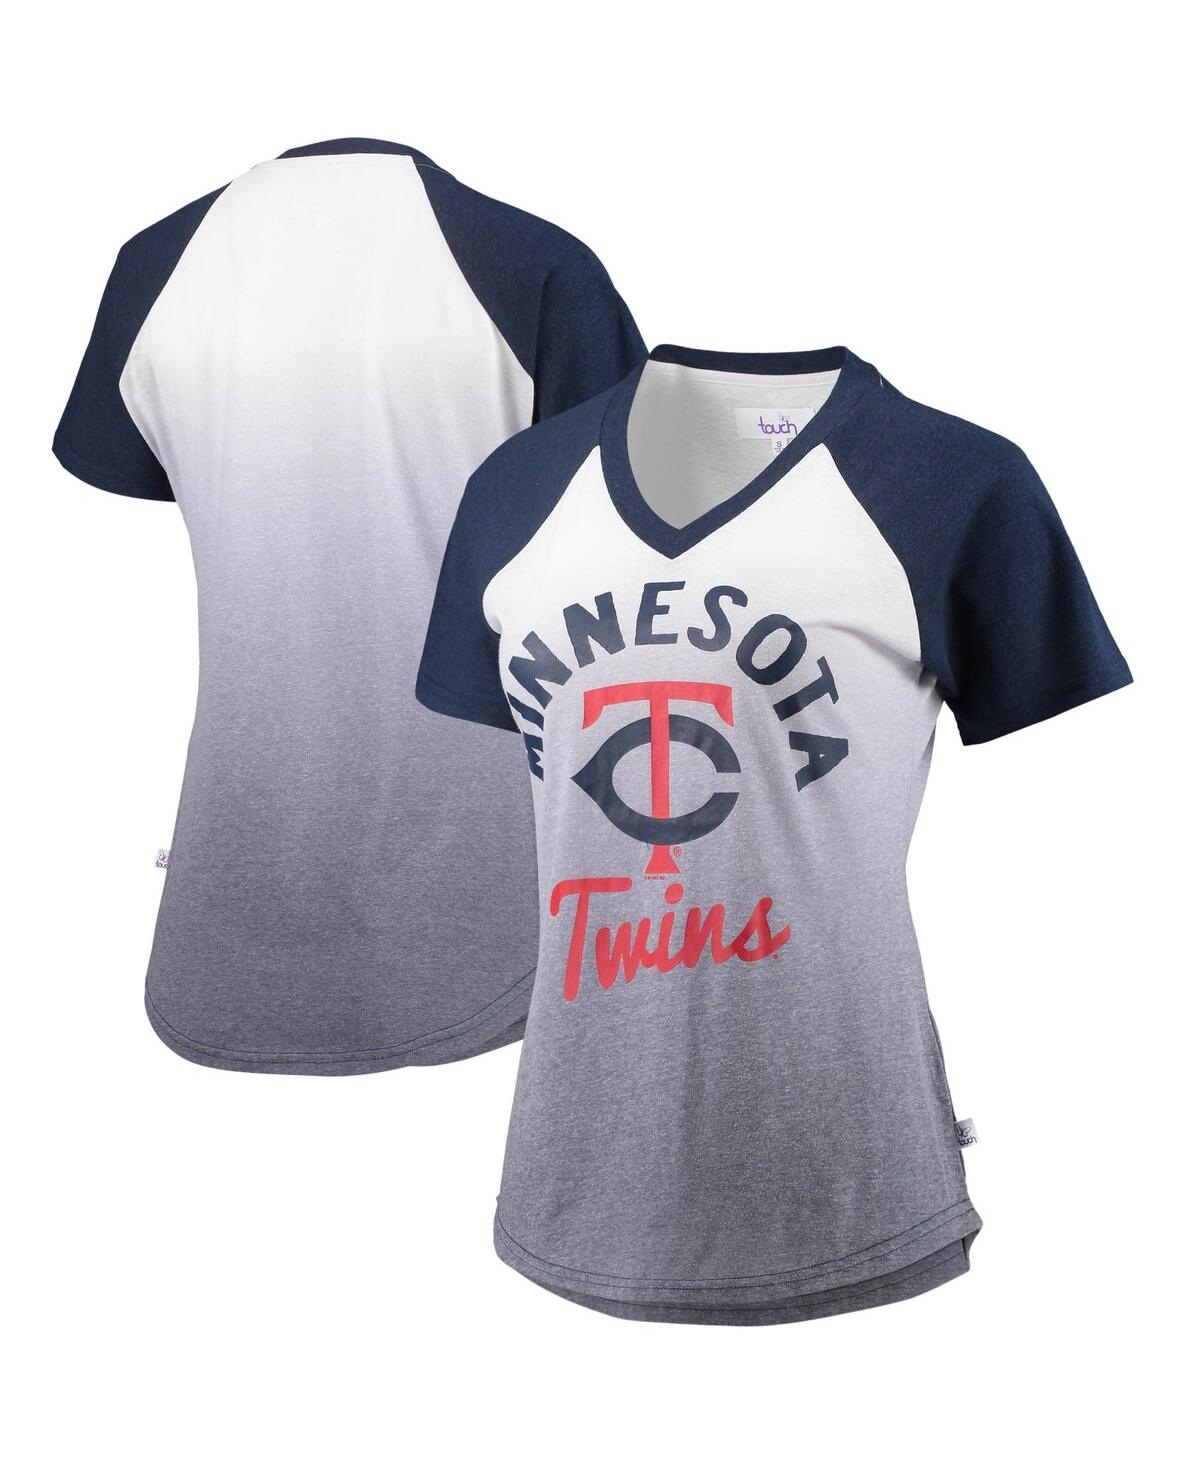 Women's Navy and White Minnesota Twins Shortstop Ombre Raglan V-Neck T-shirt - Navy, White